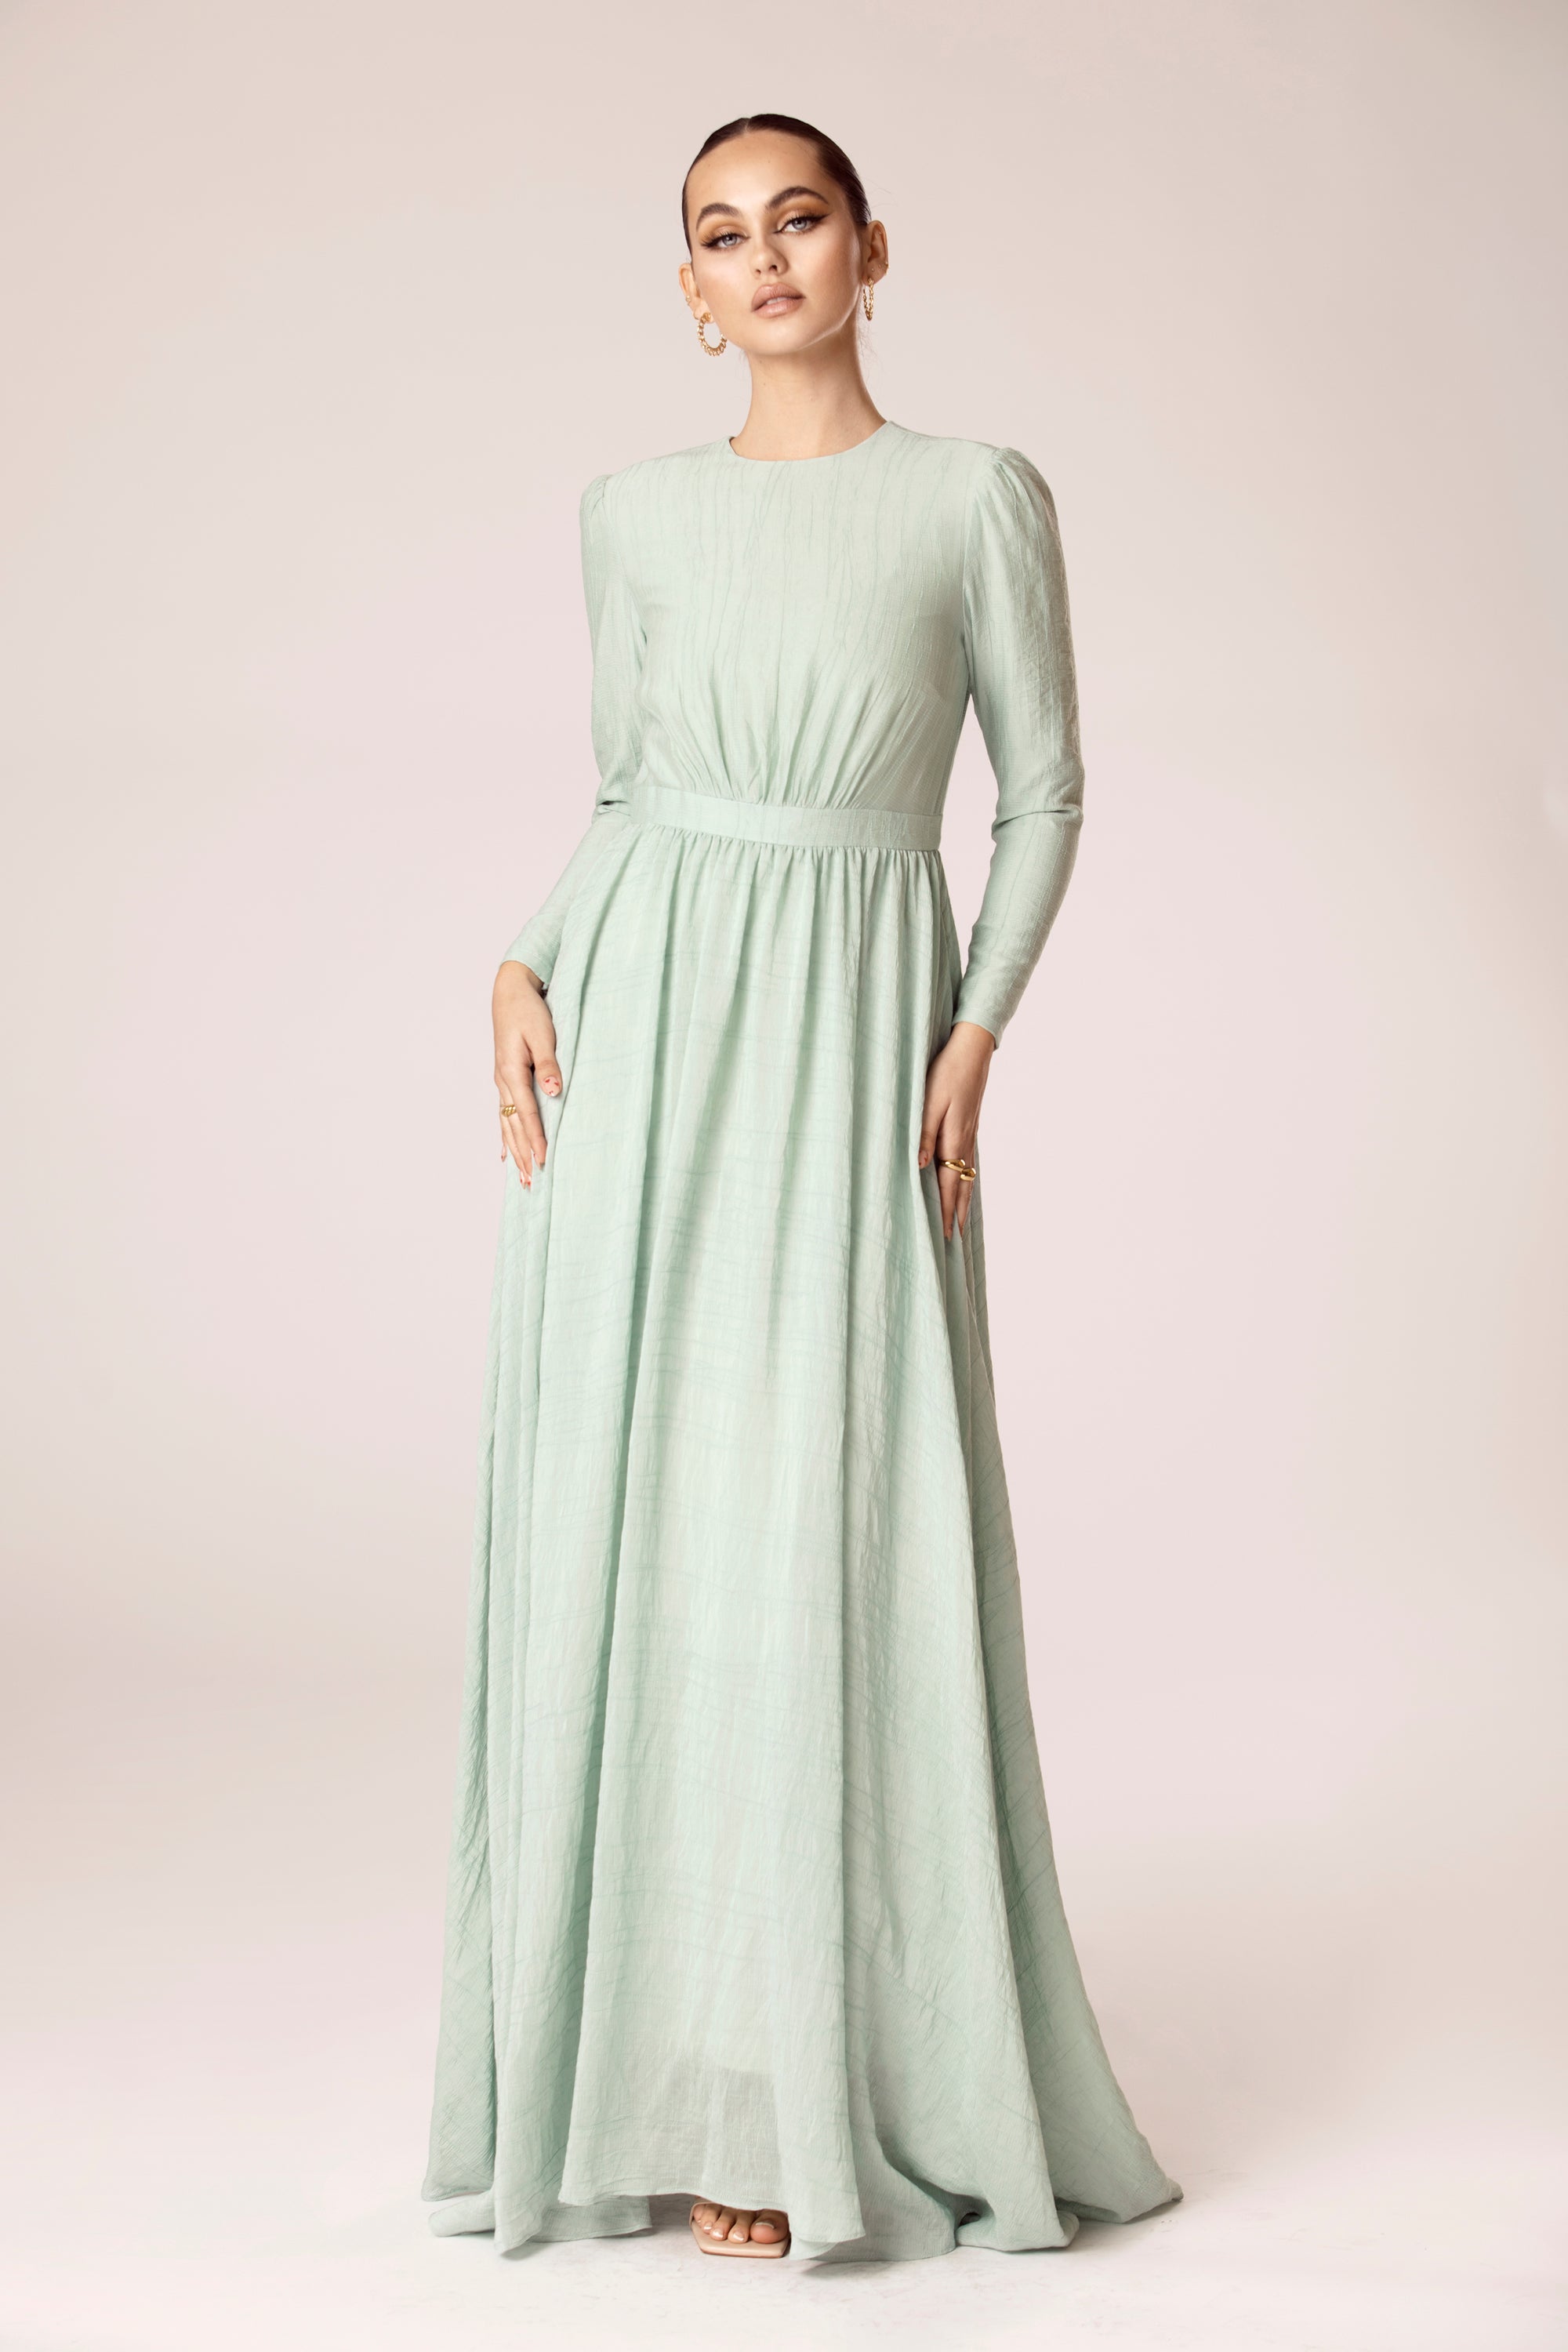 Lana Textured A Line Maxi Dress - Light Green Veiled Collection 